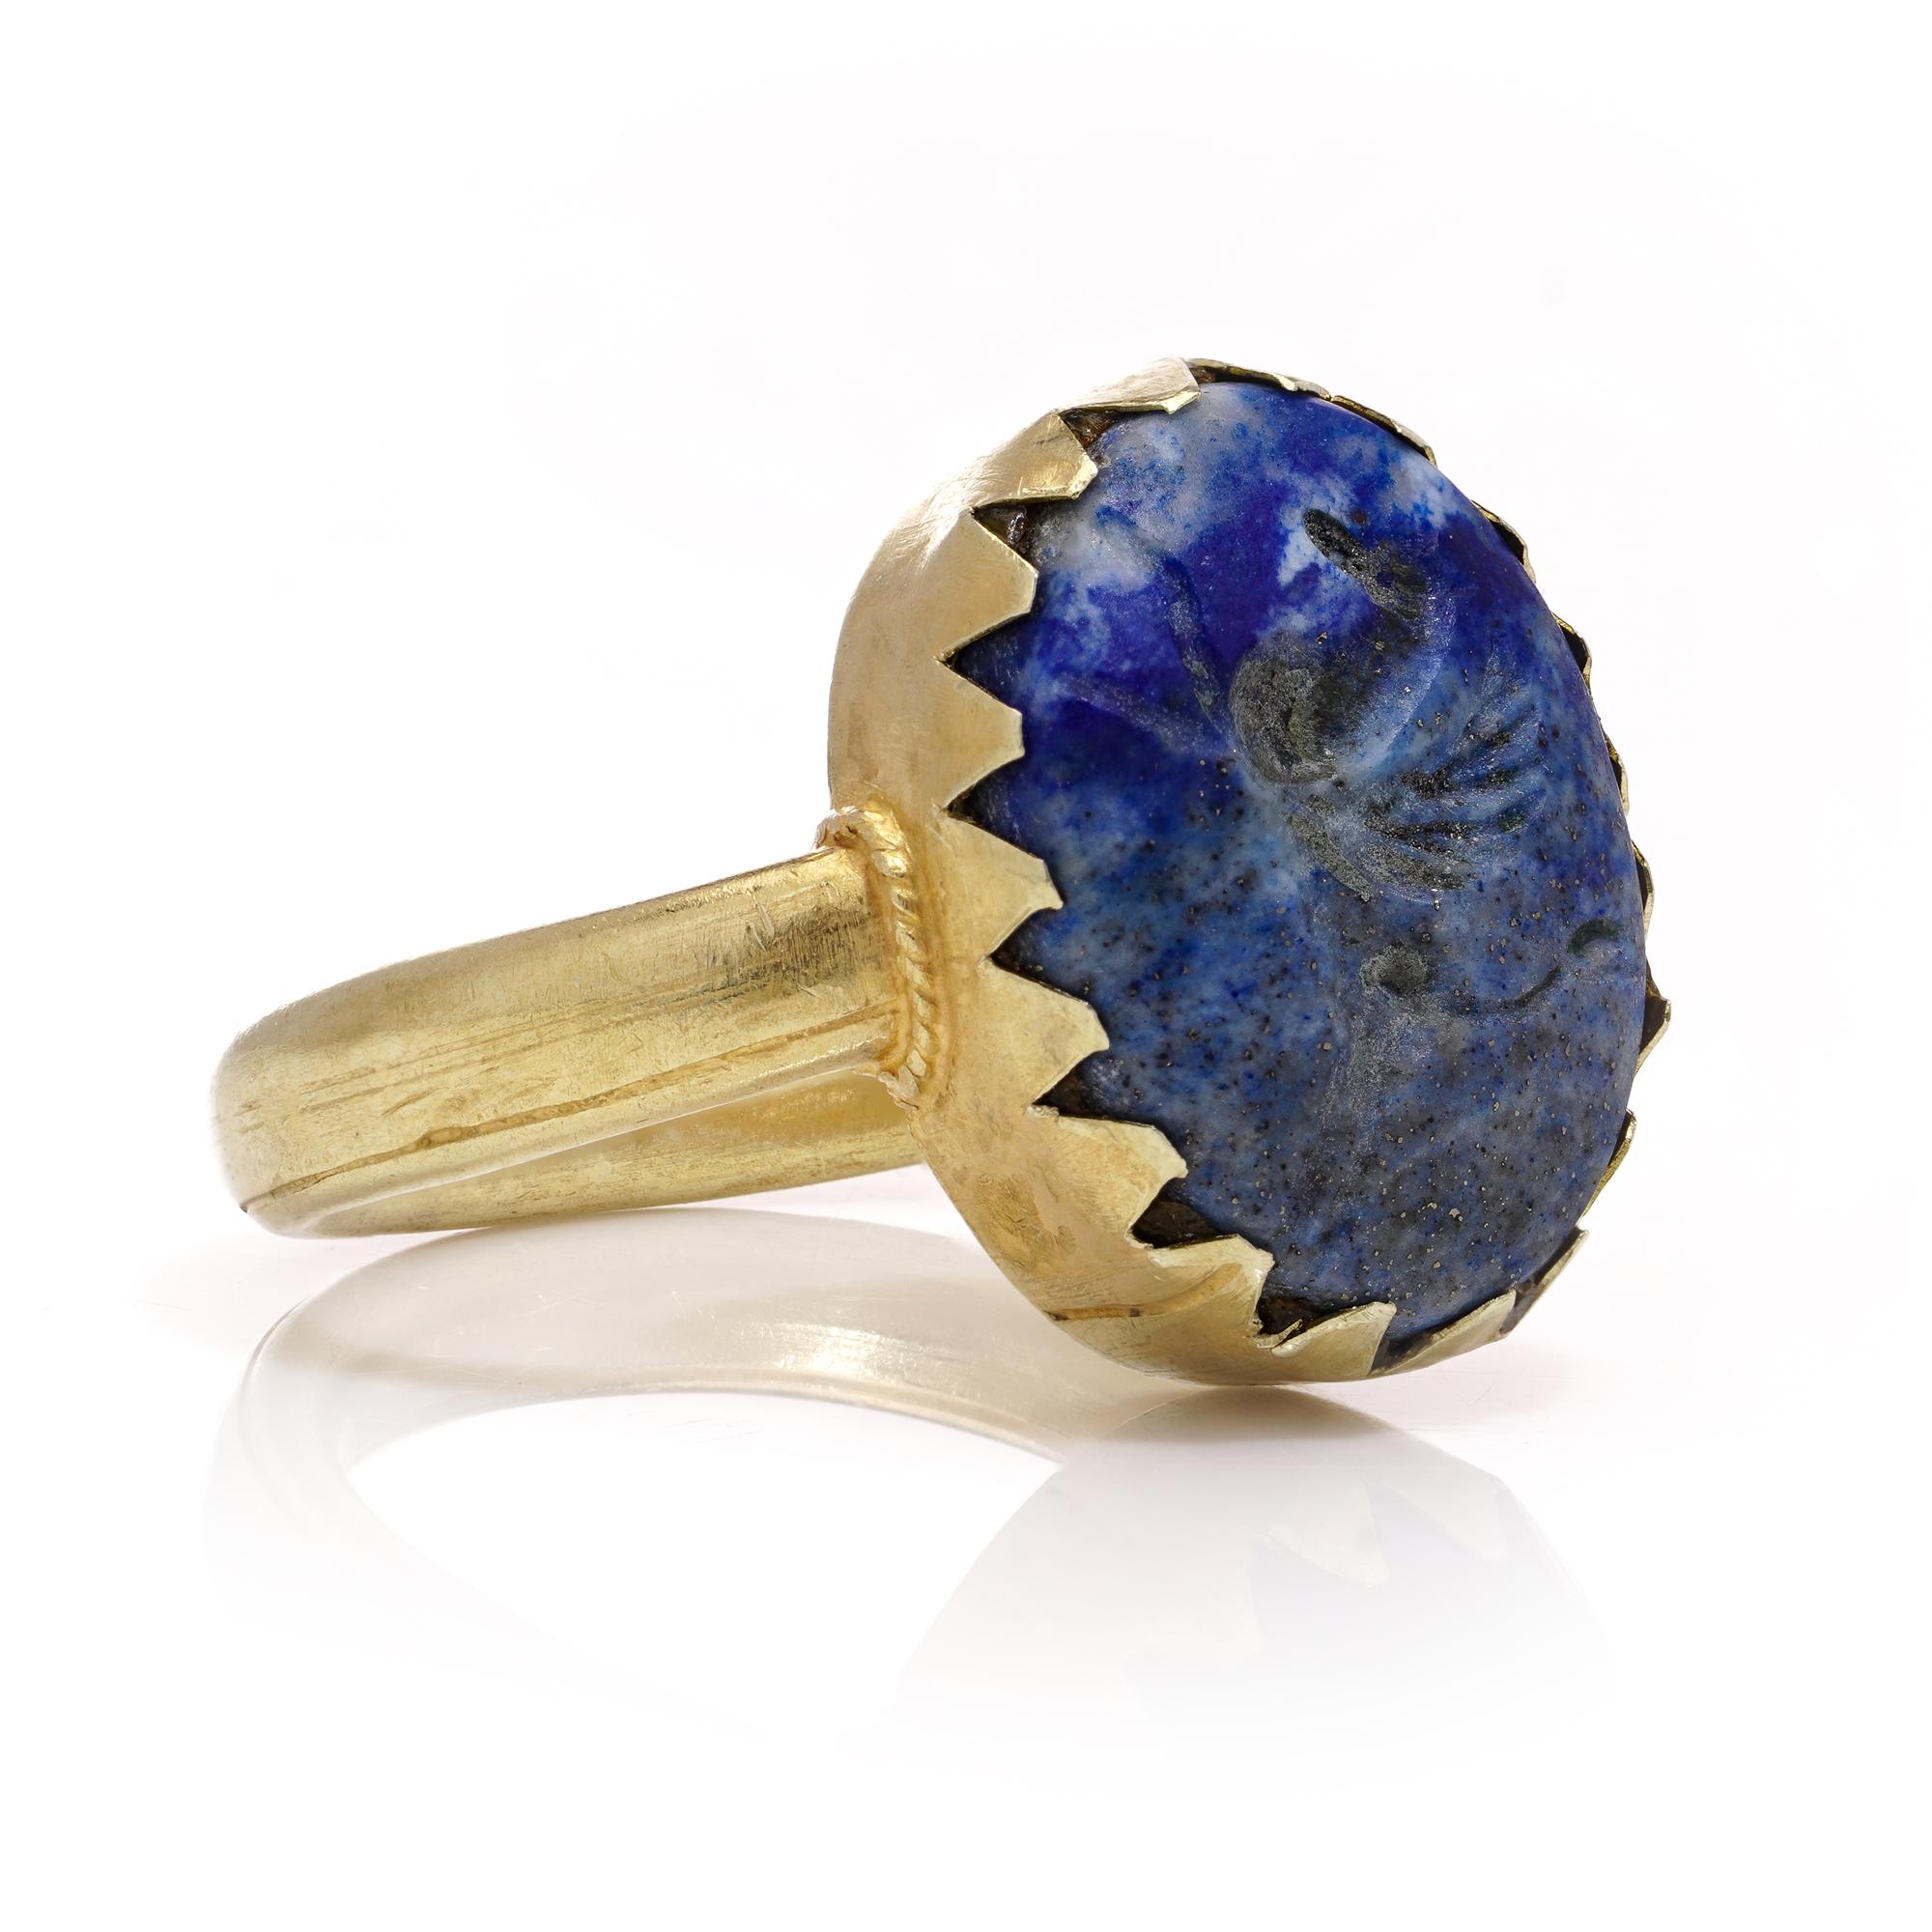 Antique 19th Century 18kt gold lapis lazuli intaglio ring with pegasus carving For Sale 2